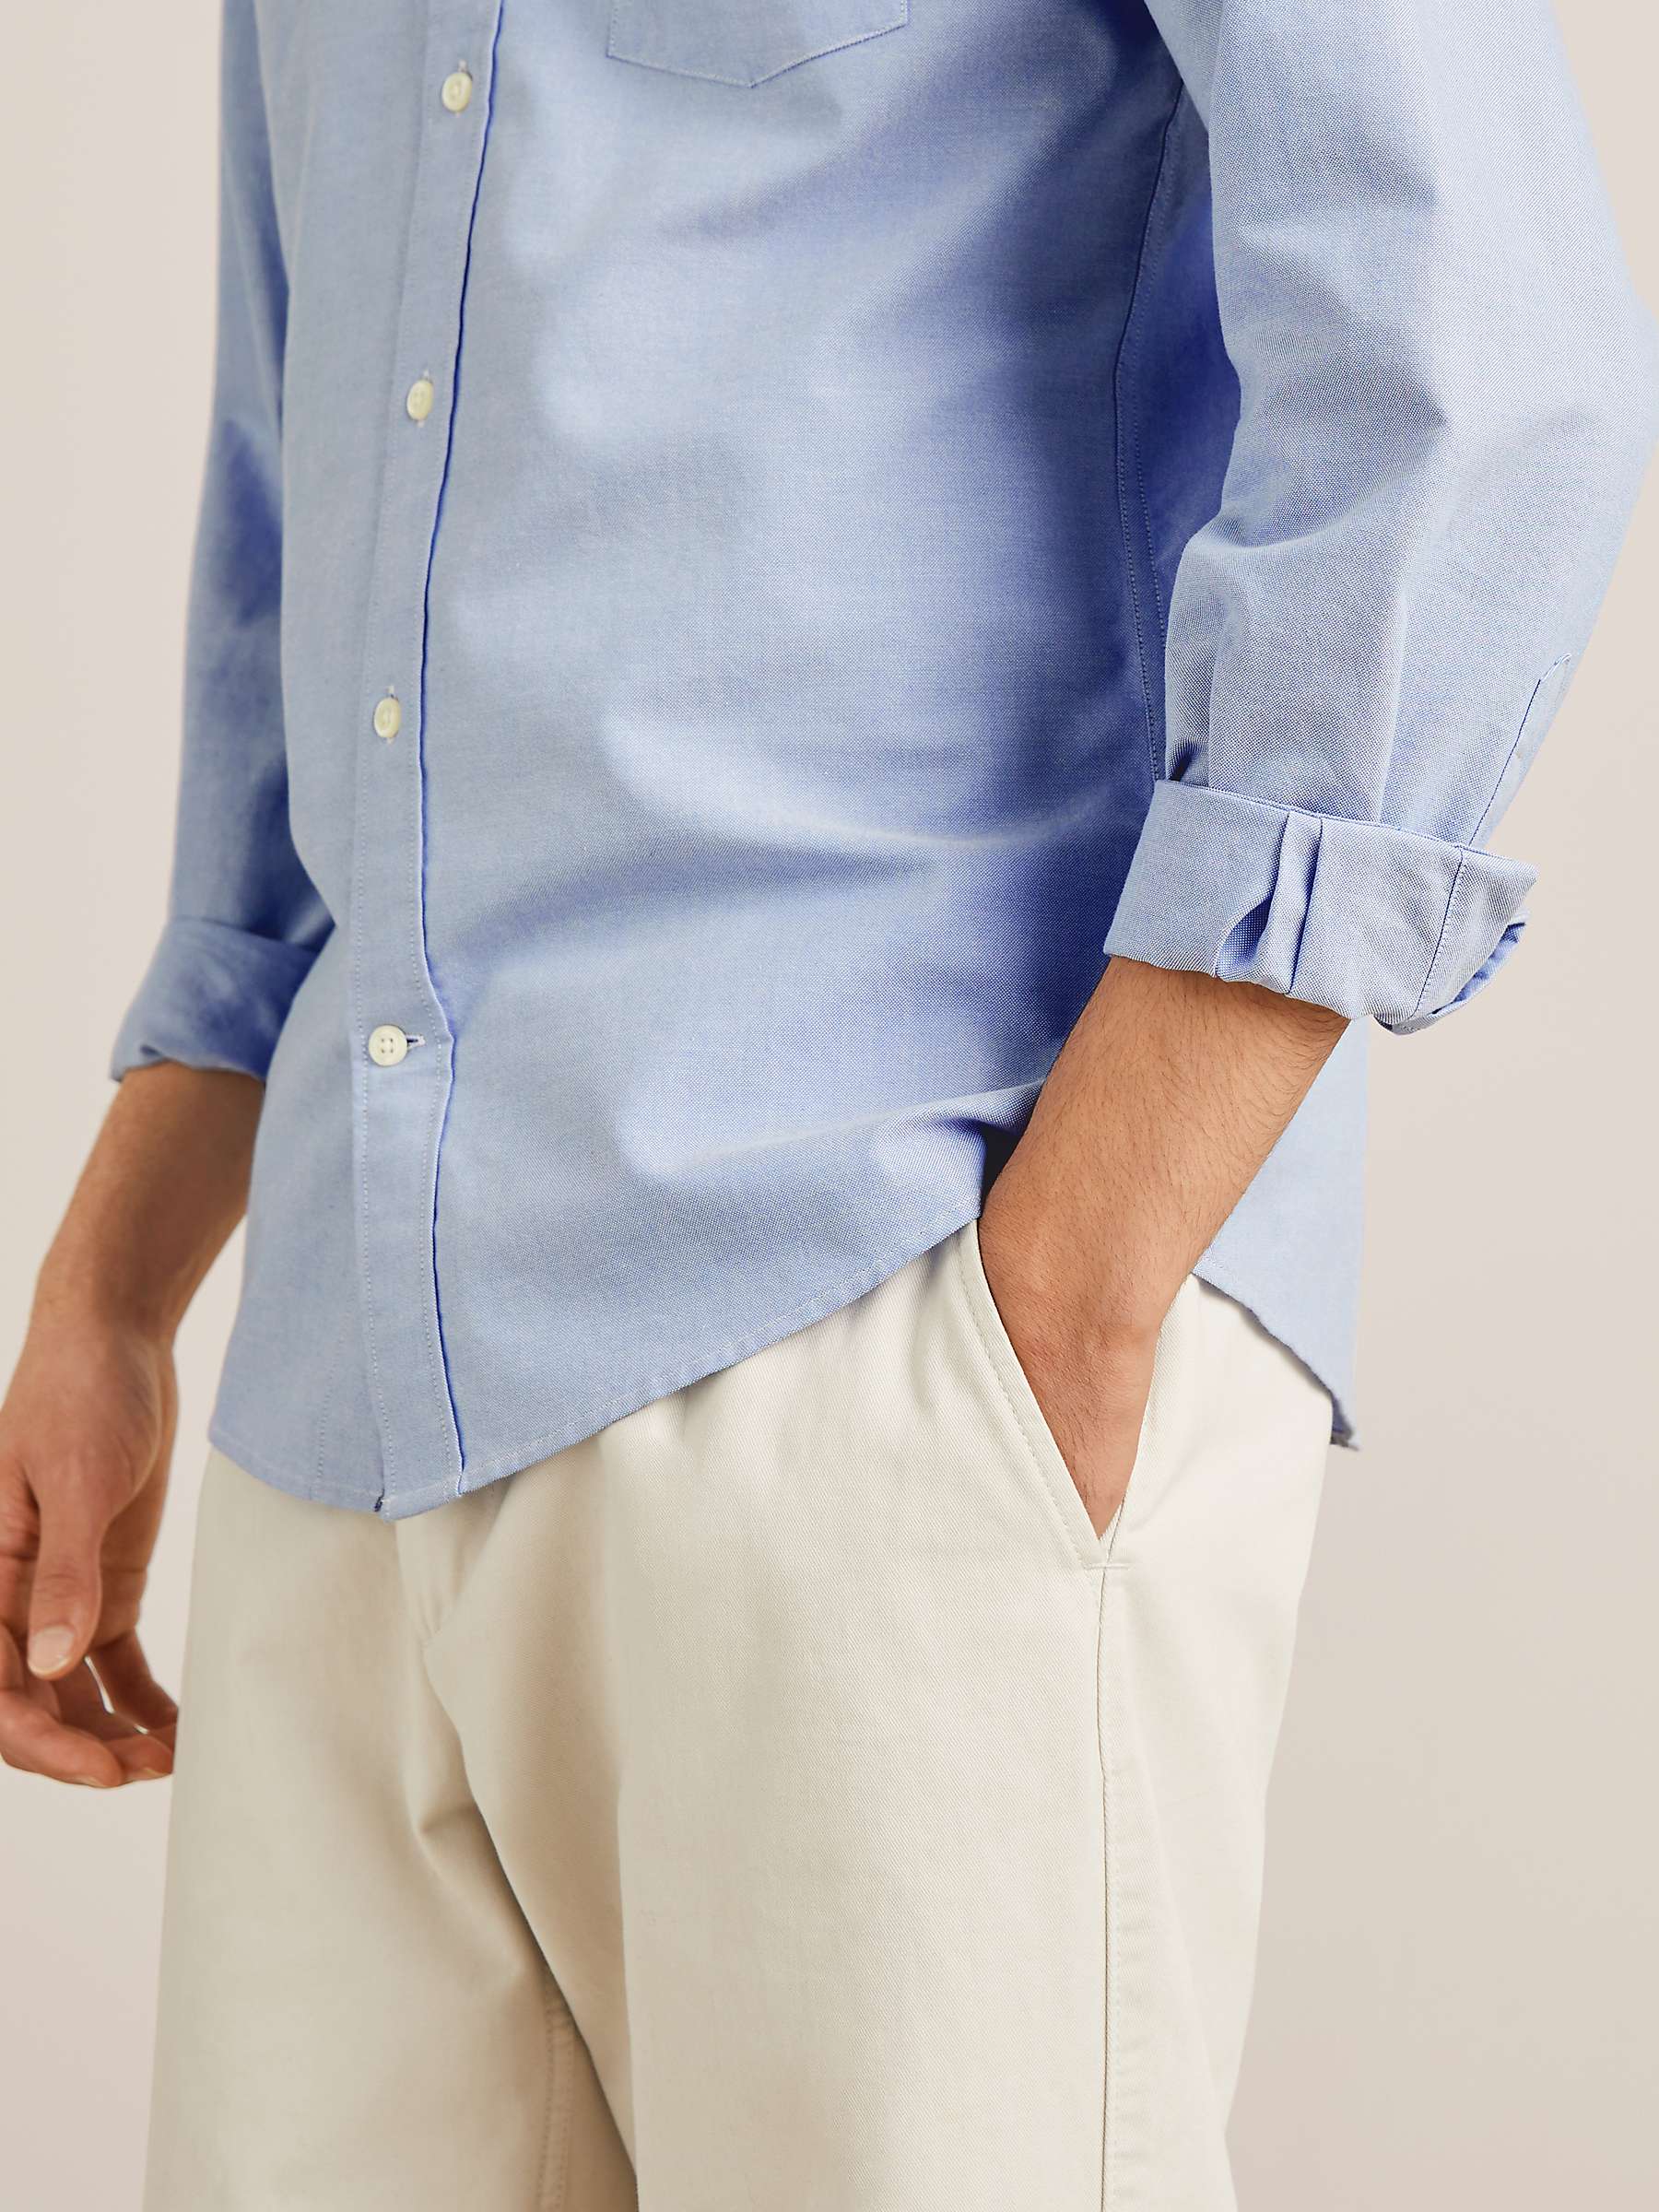 Buy John Lewis Regular Fit Cotton Oxford Button Down Shirt Online at johnlewis.com